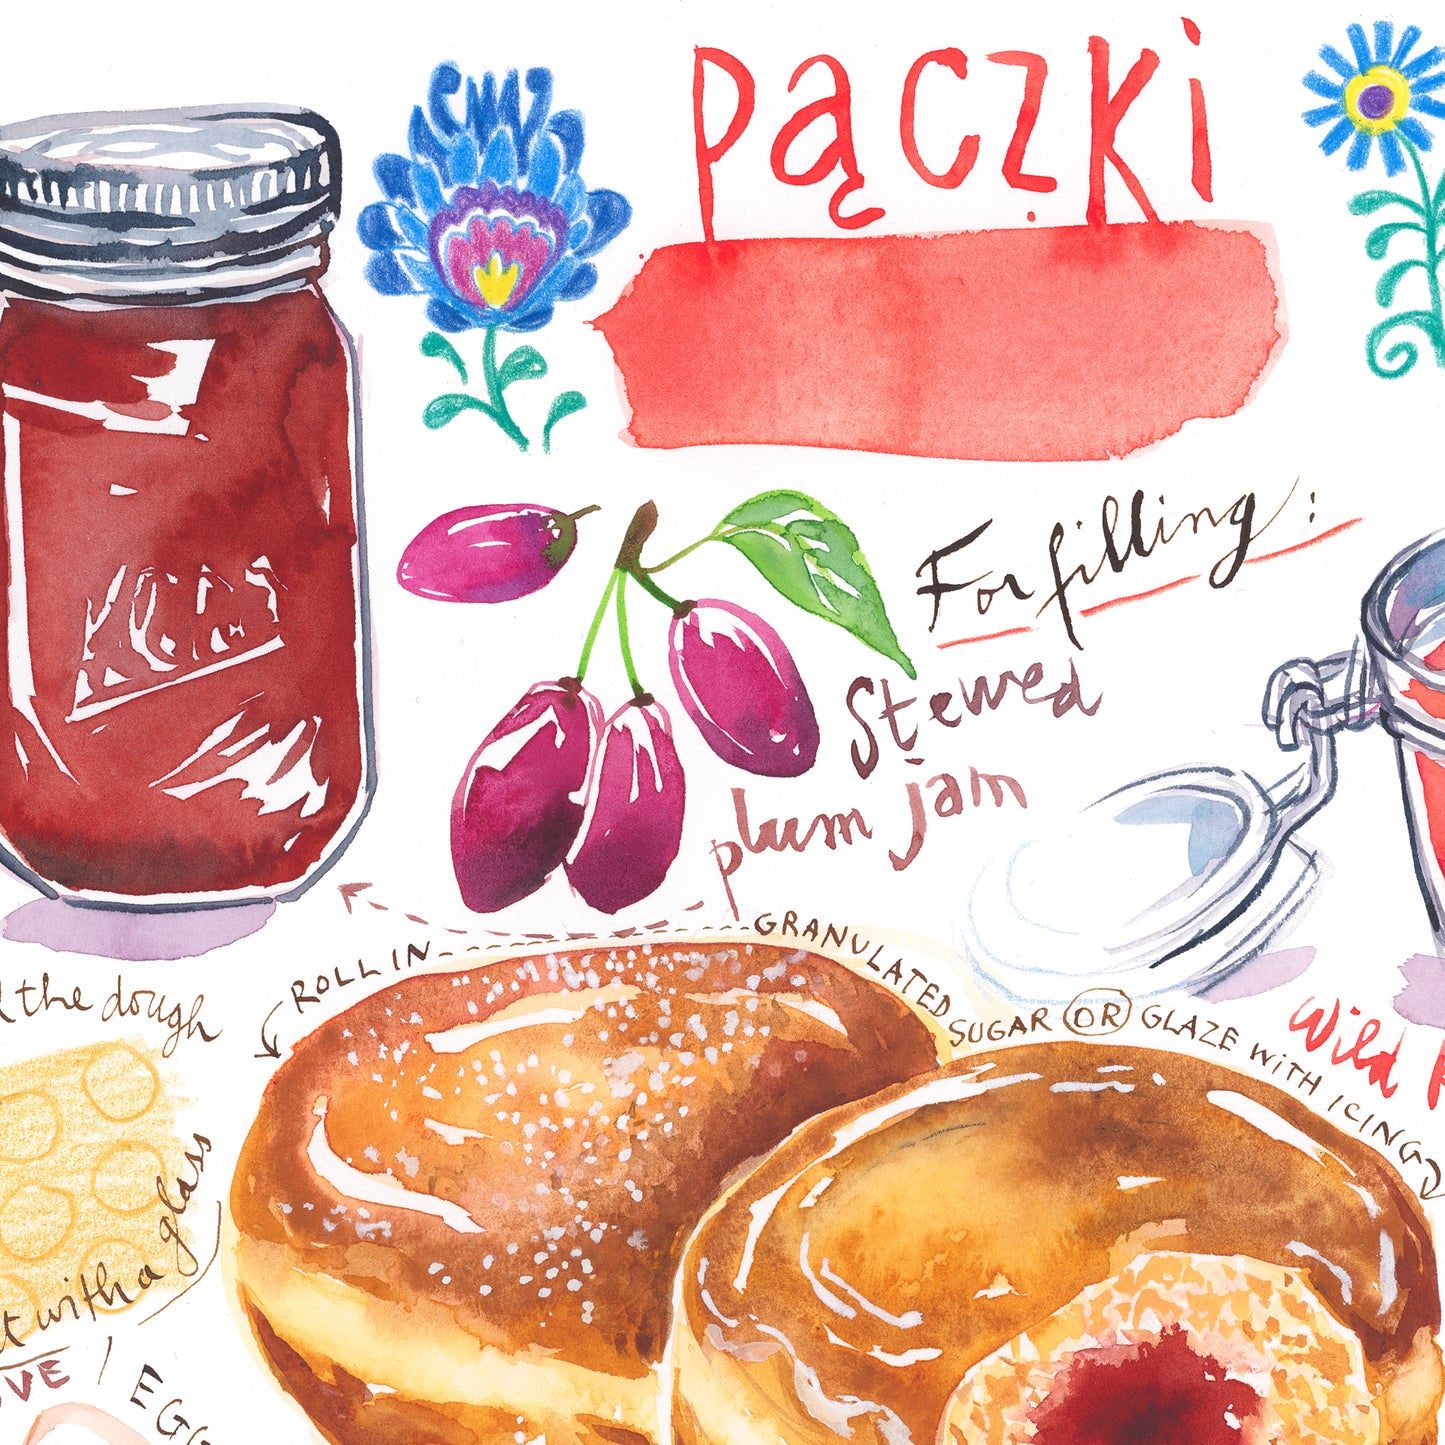 Polish Paczki recipe